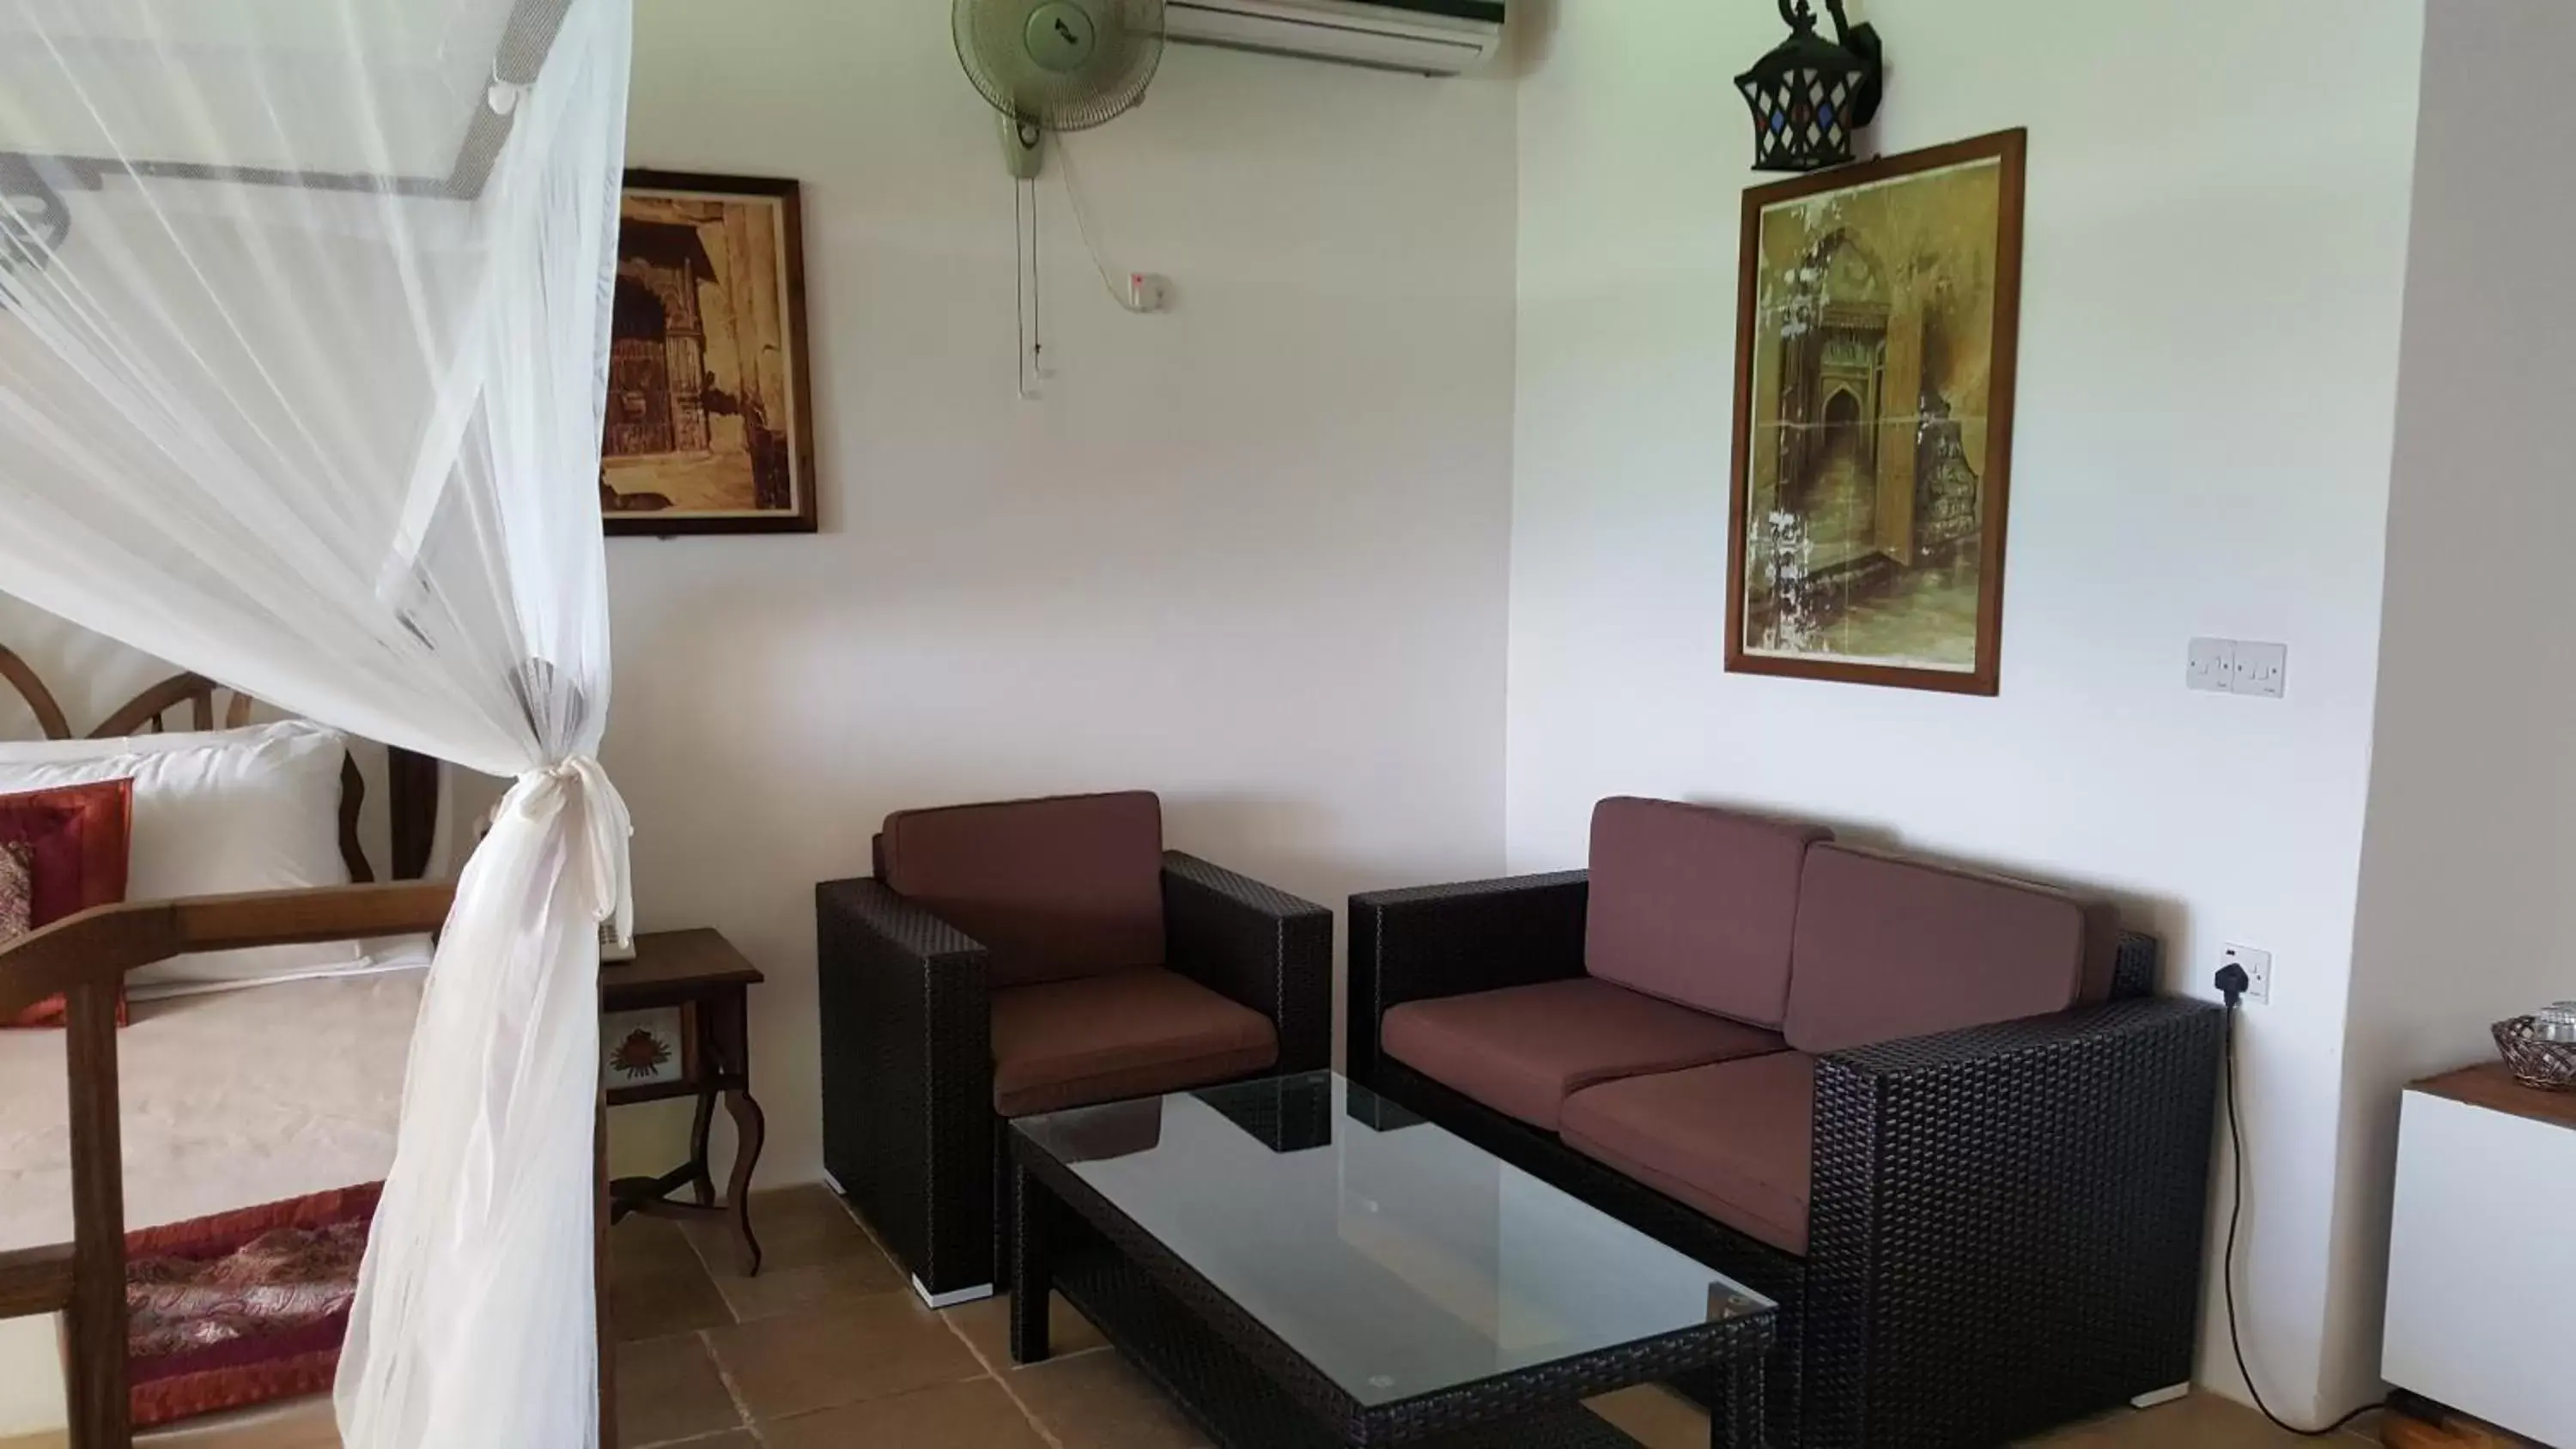 Coffee/tea facilities, Seating Area in Langi Langi Beach Bungalows